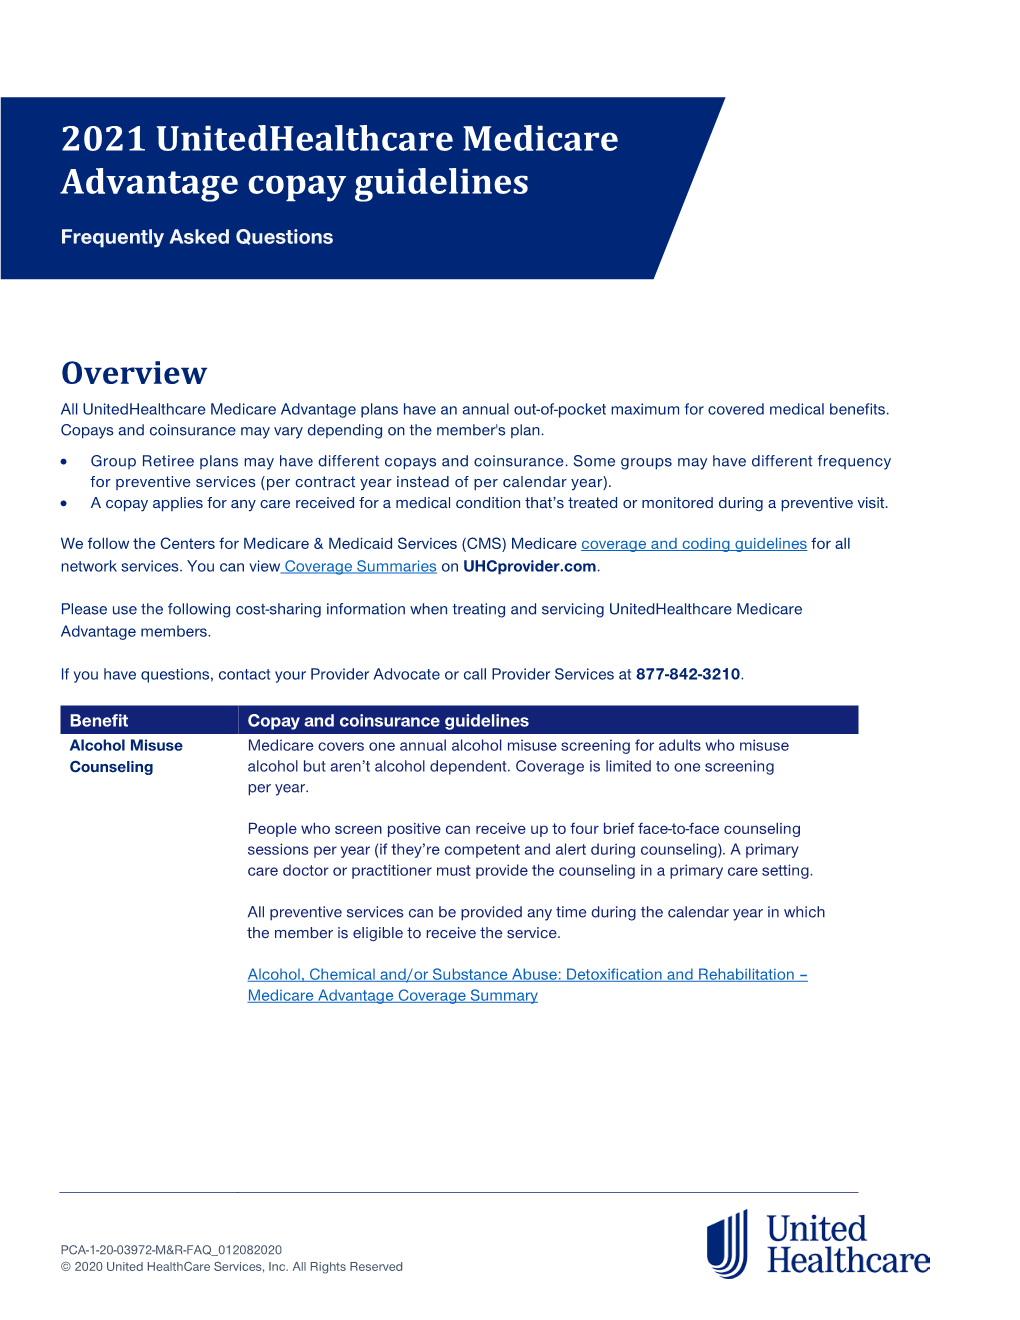 2021 Unitedhealthcare Medicare Advantage Copay Guidelines